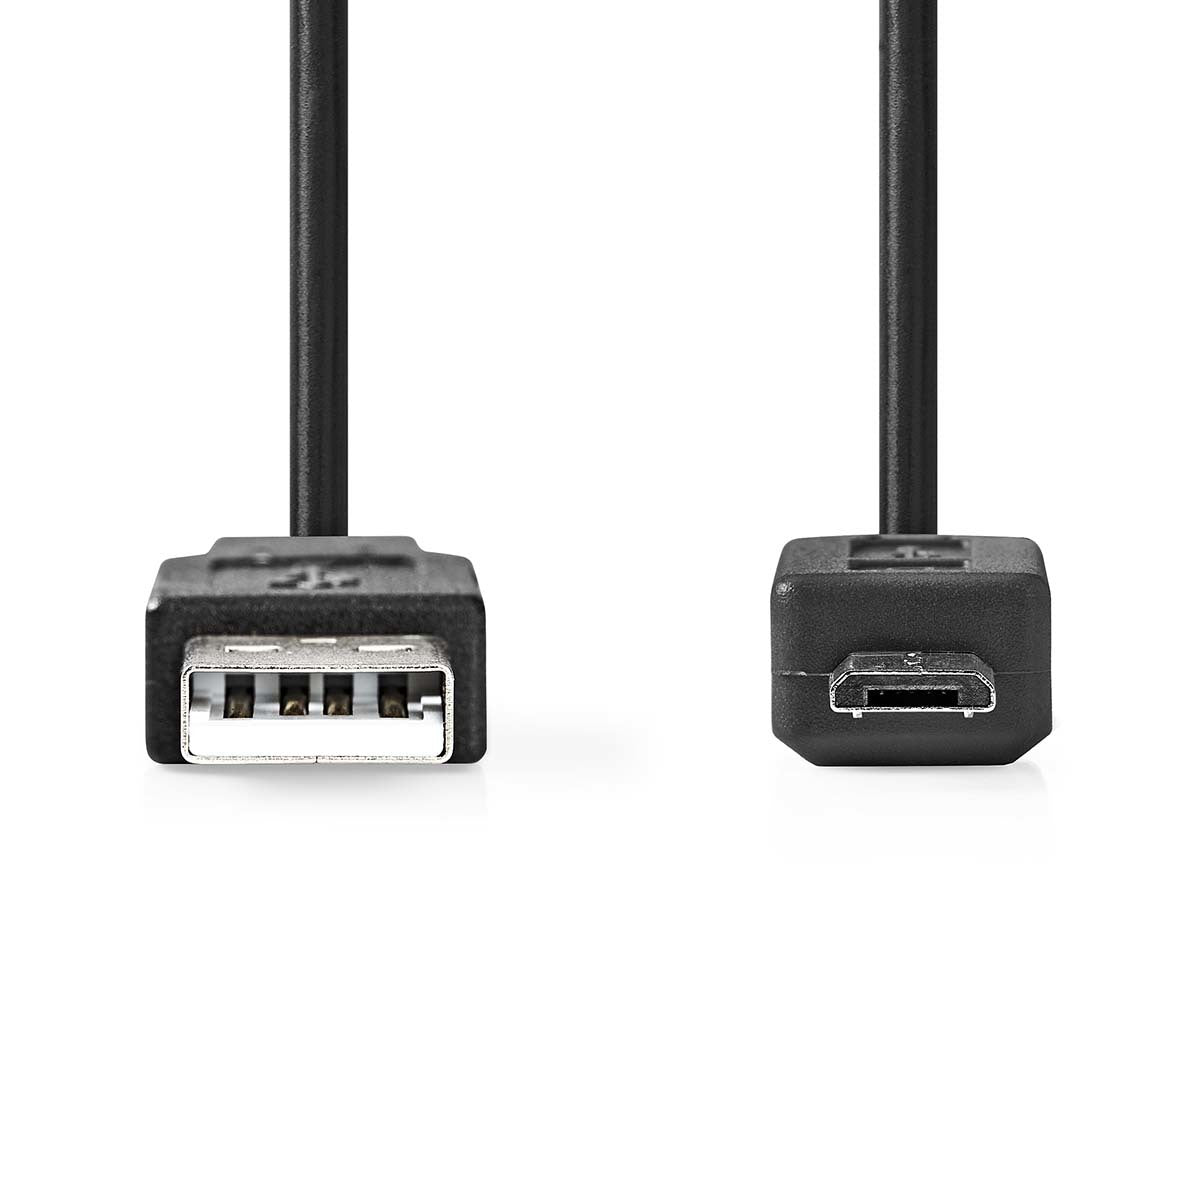 Nedis USB kabel USB-A Male naar USB Micro-B Male, lengte kabel 3 meter